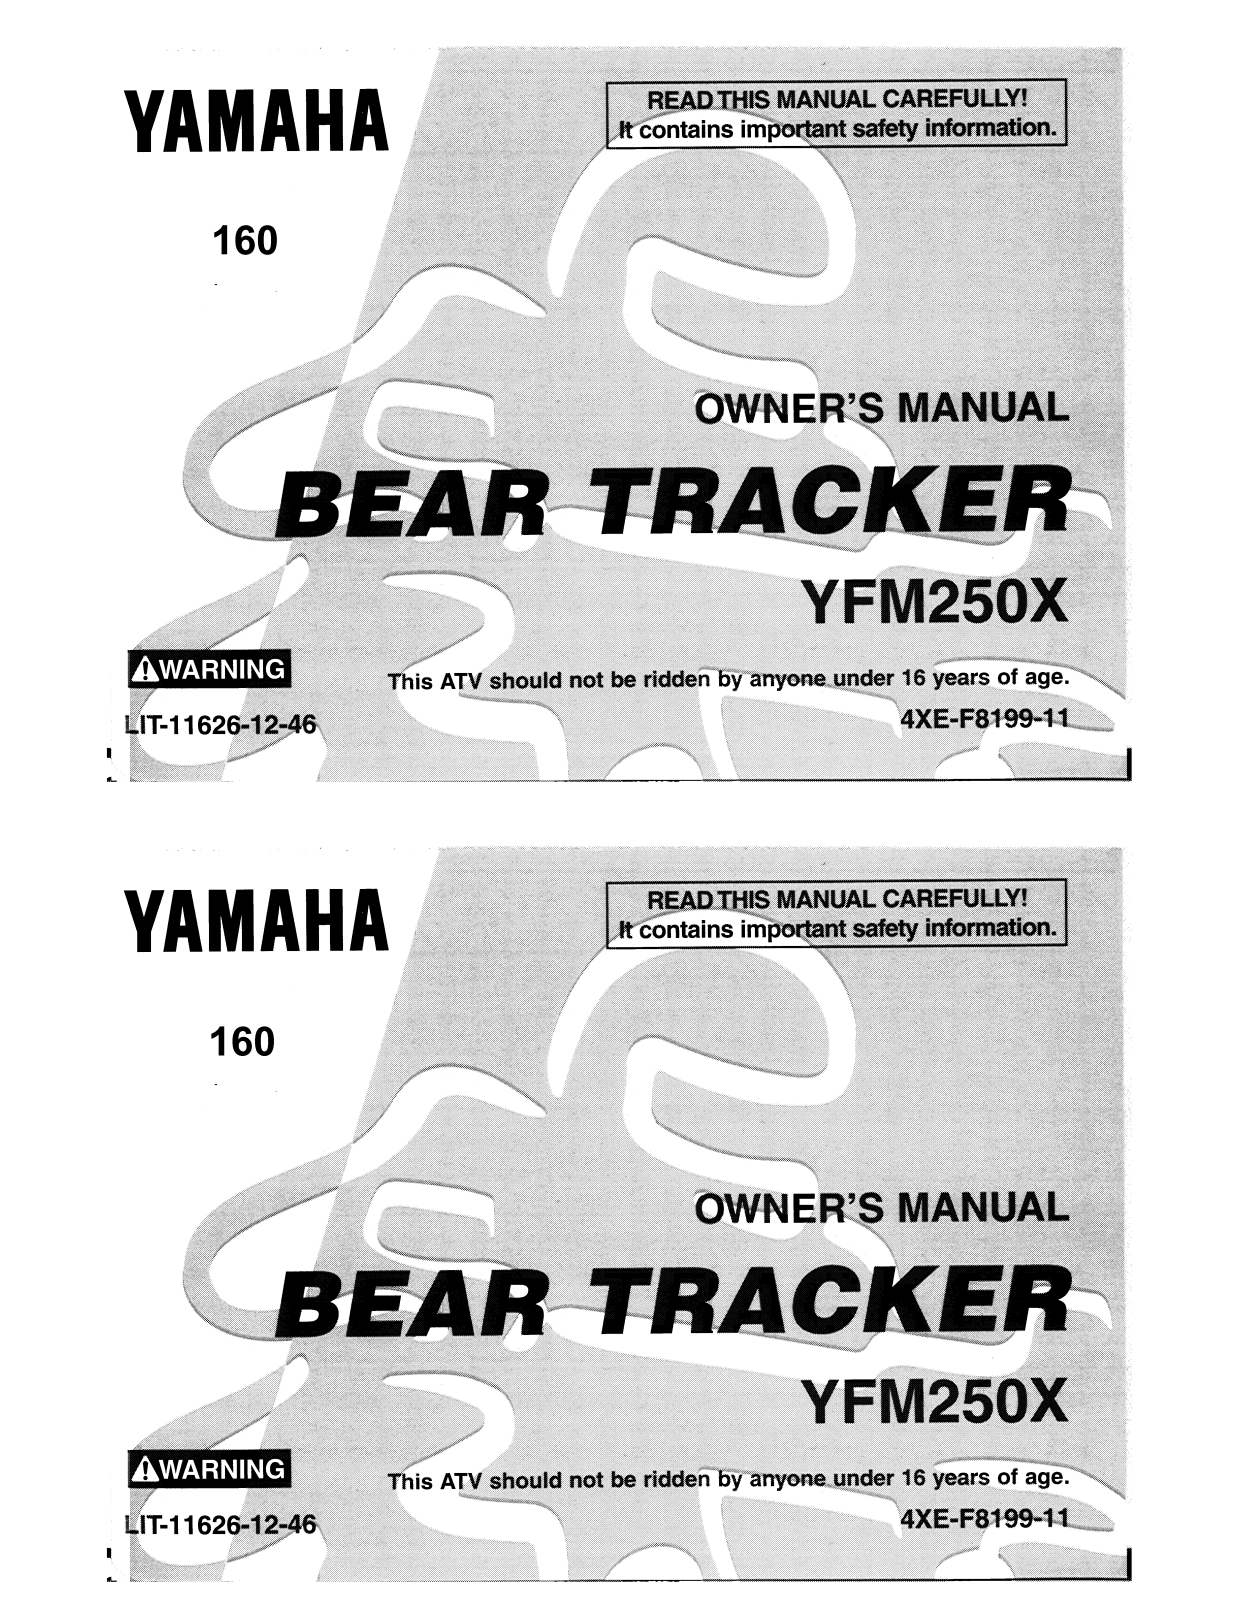 Yamaha YFM250X User Manual